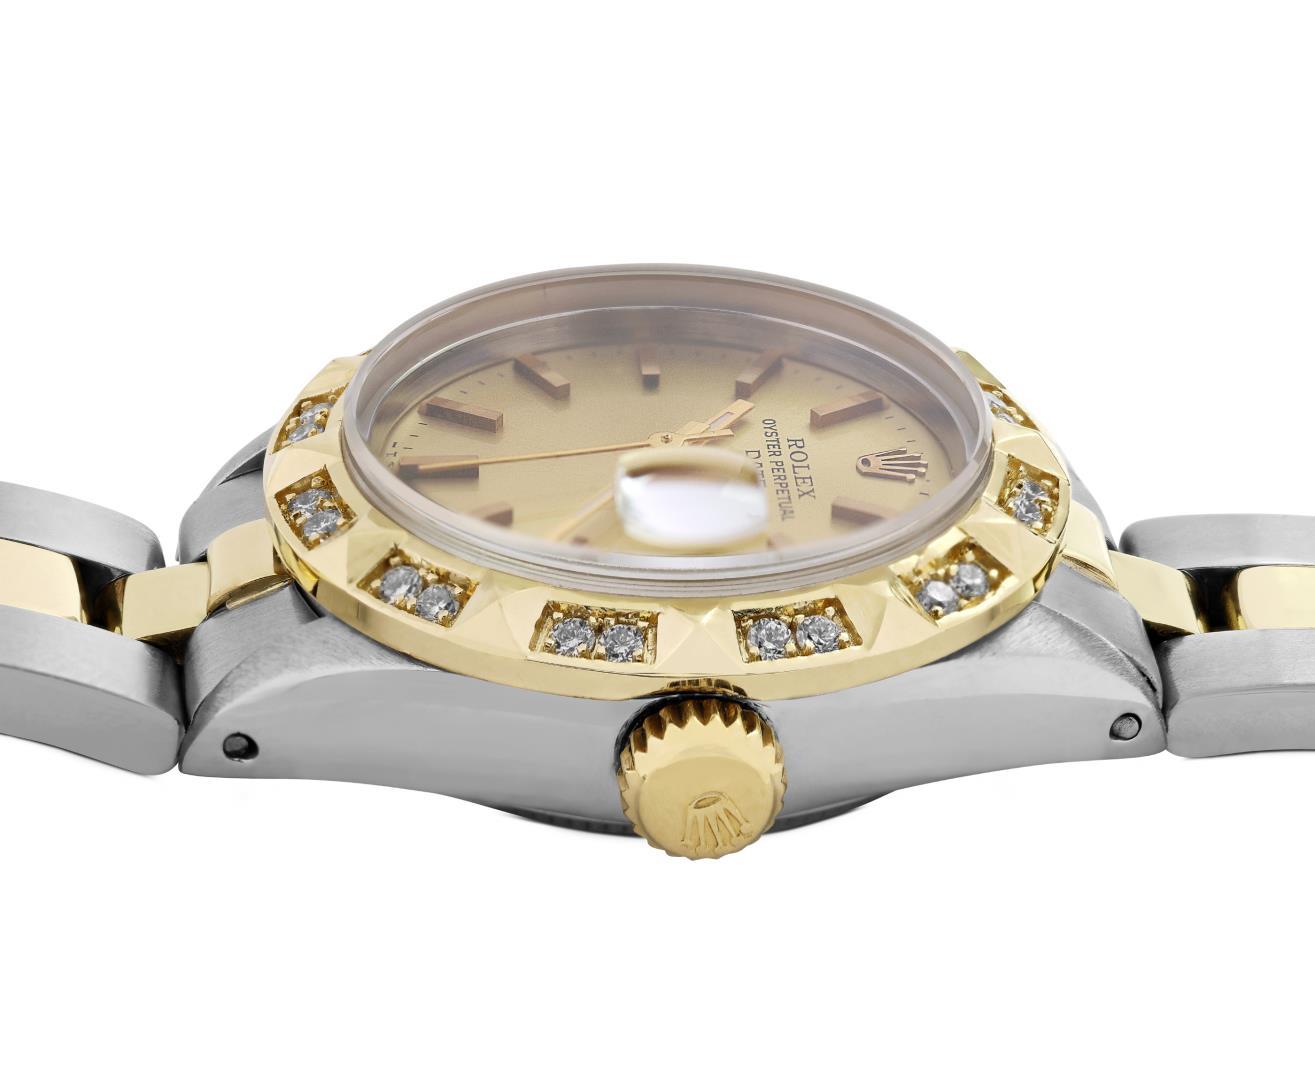 Rolex Ladies Two Tone Champagne Index Diamond Date Wristwatch with Rolex Box